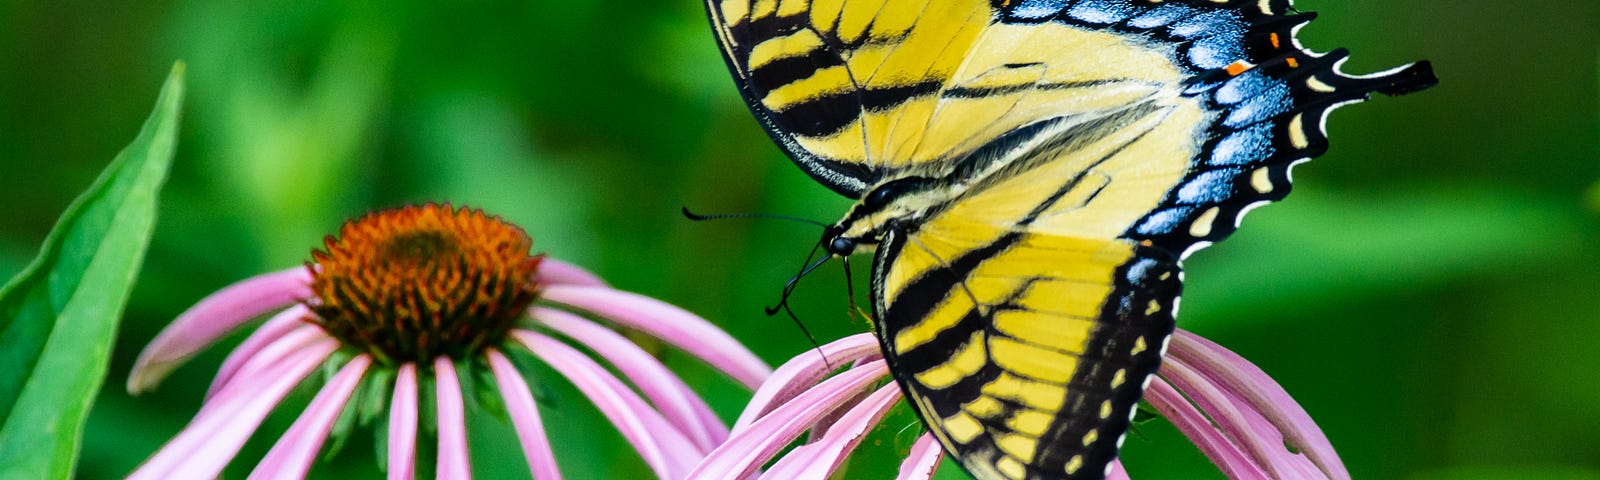 Eastern Tiger Swallowtail butterfly.